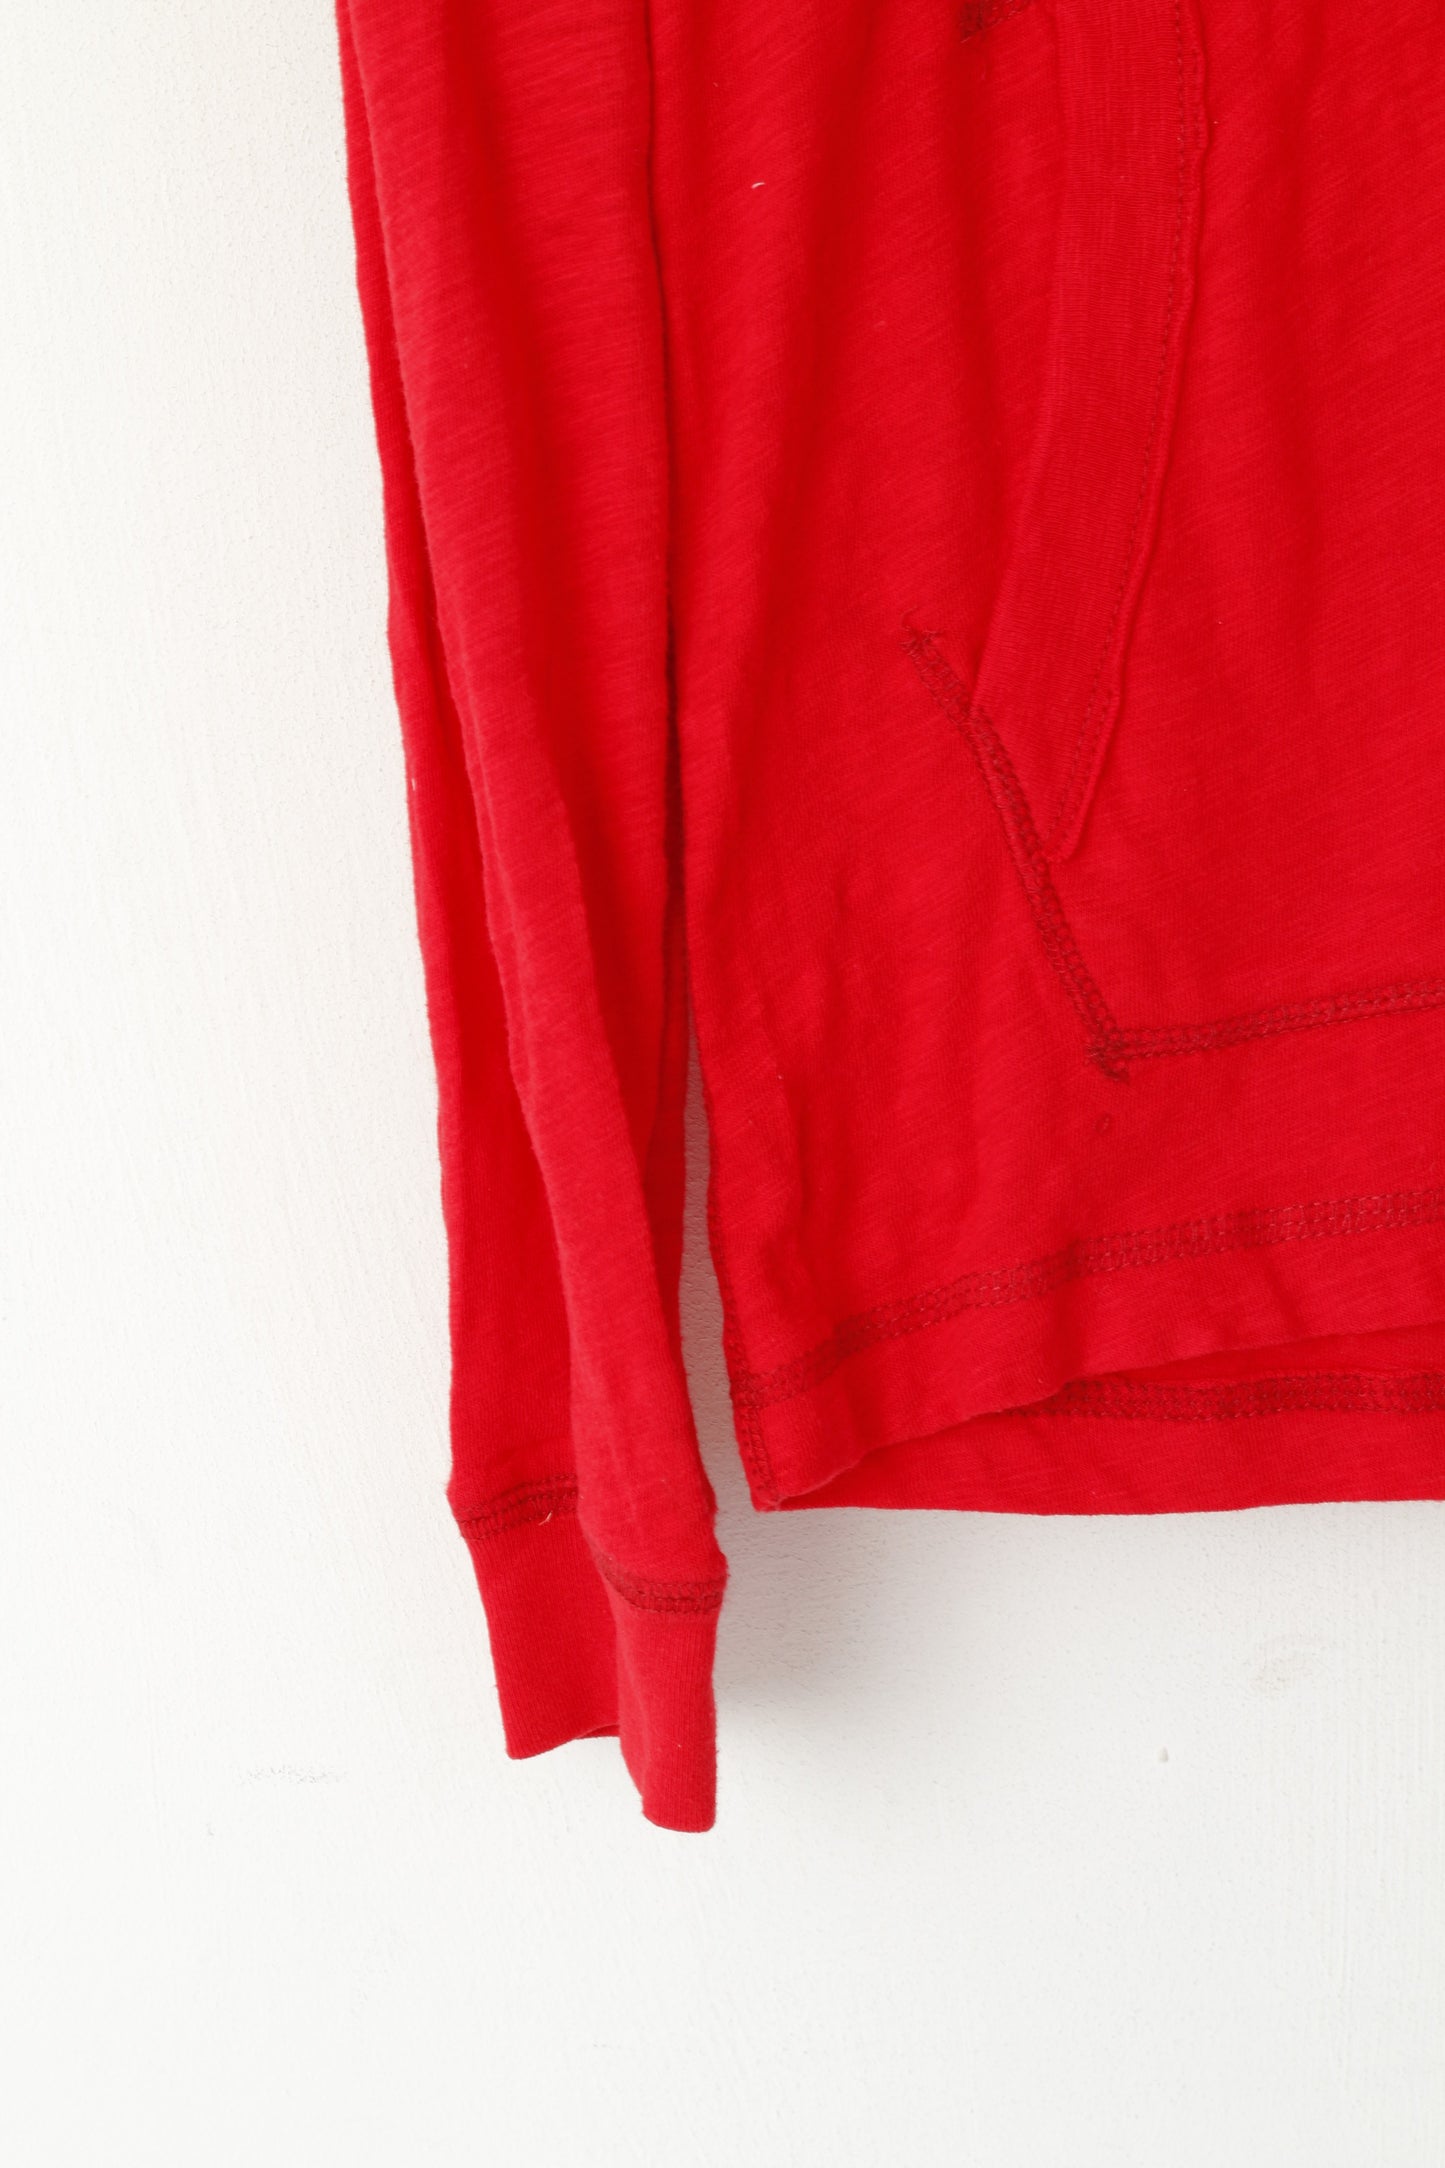 Aeropostale Men S Shirt Red Cotton Hooded New York Graphic Kangaroo Pocket Top